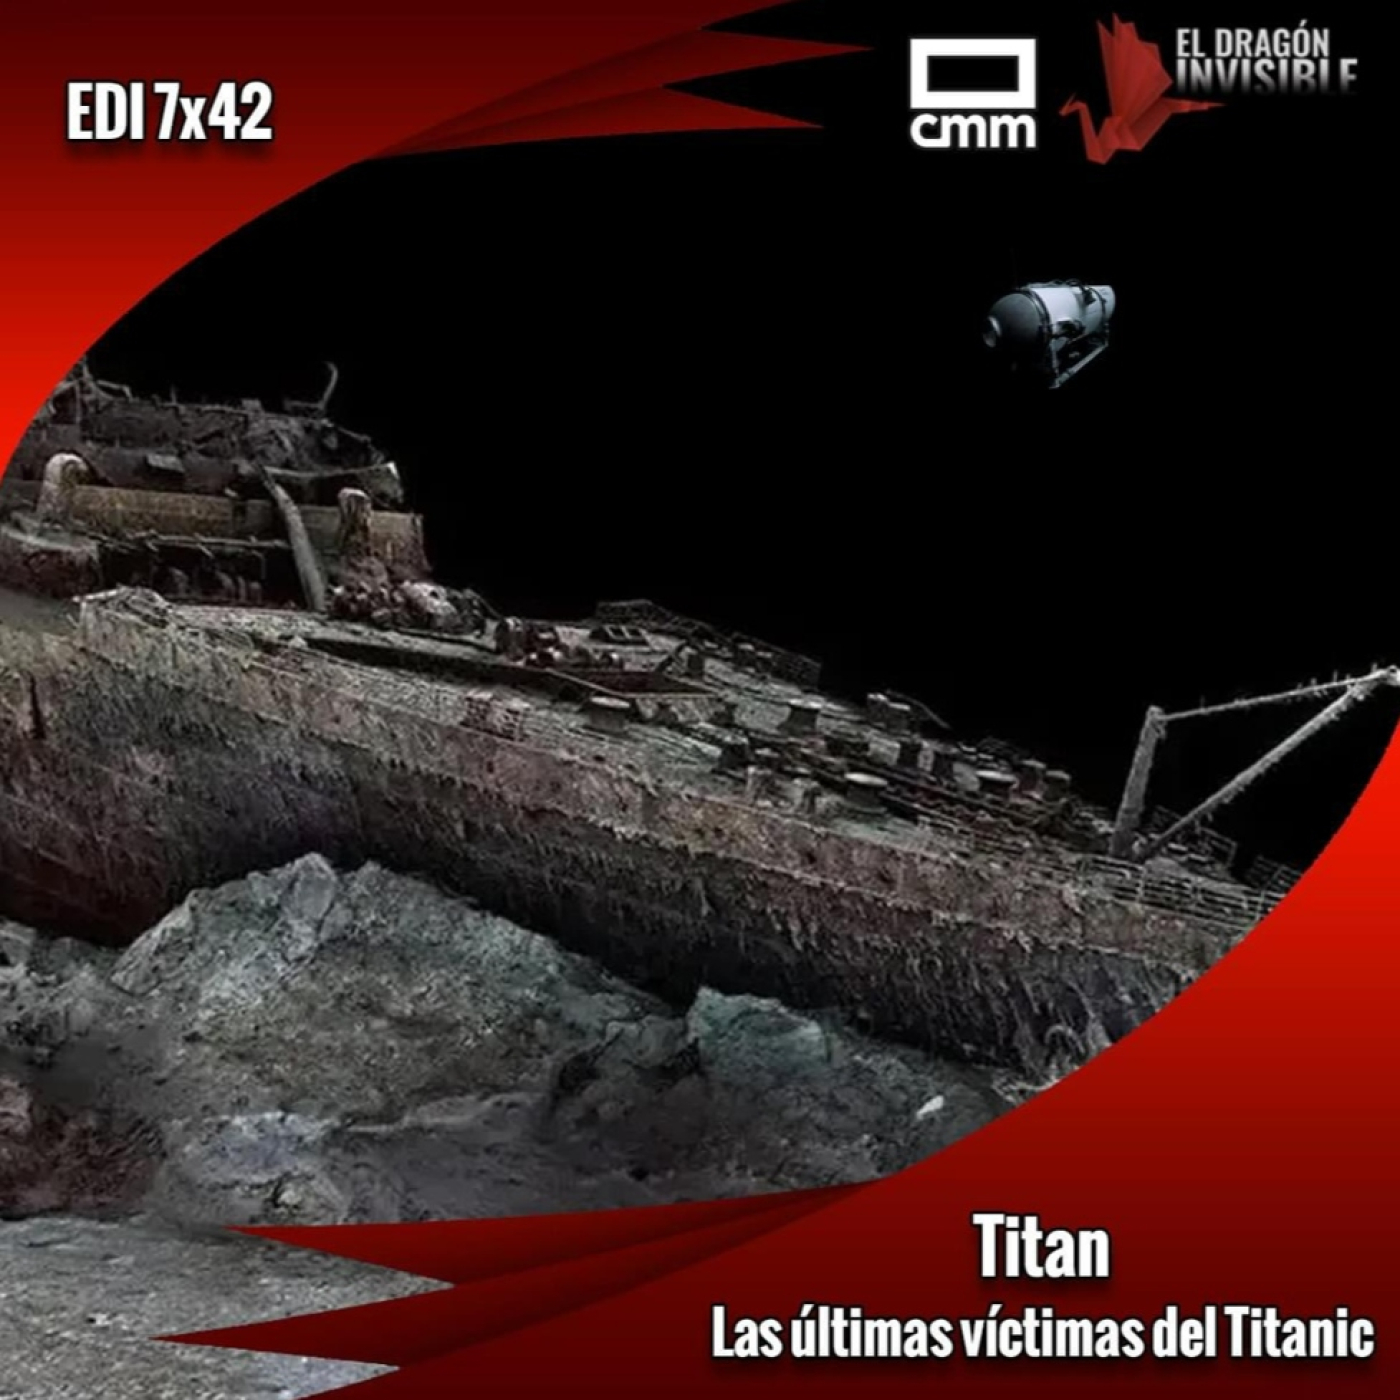 EDI 7x42 - Titan. Las últimas víctimas del Titanic